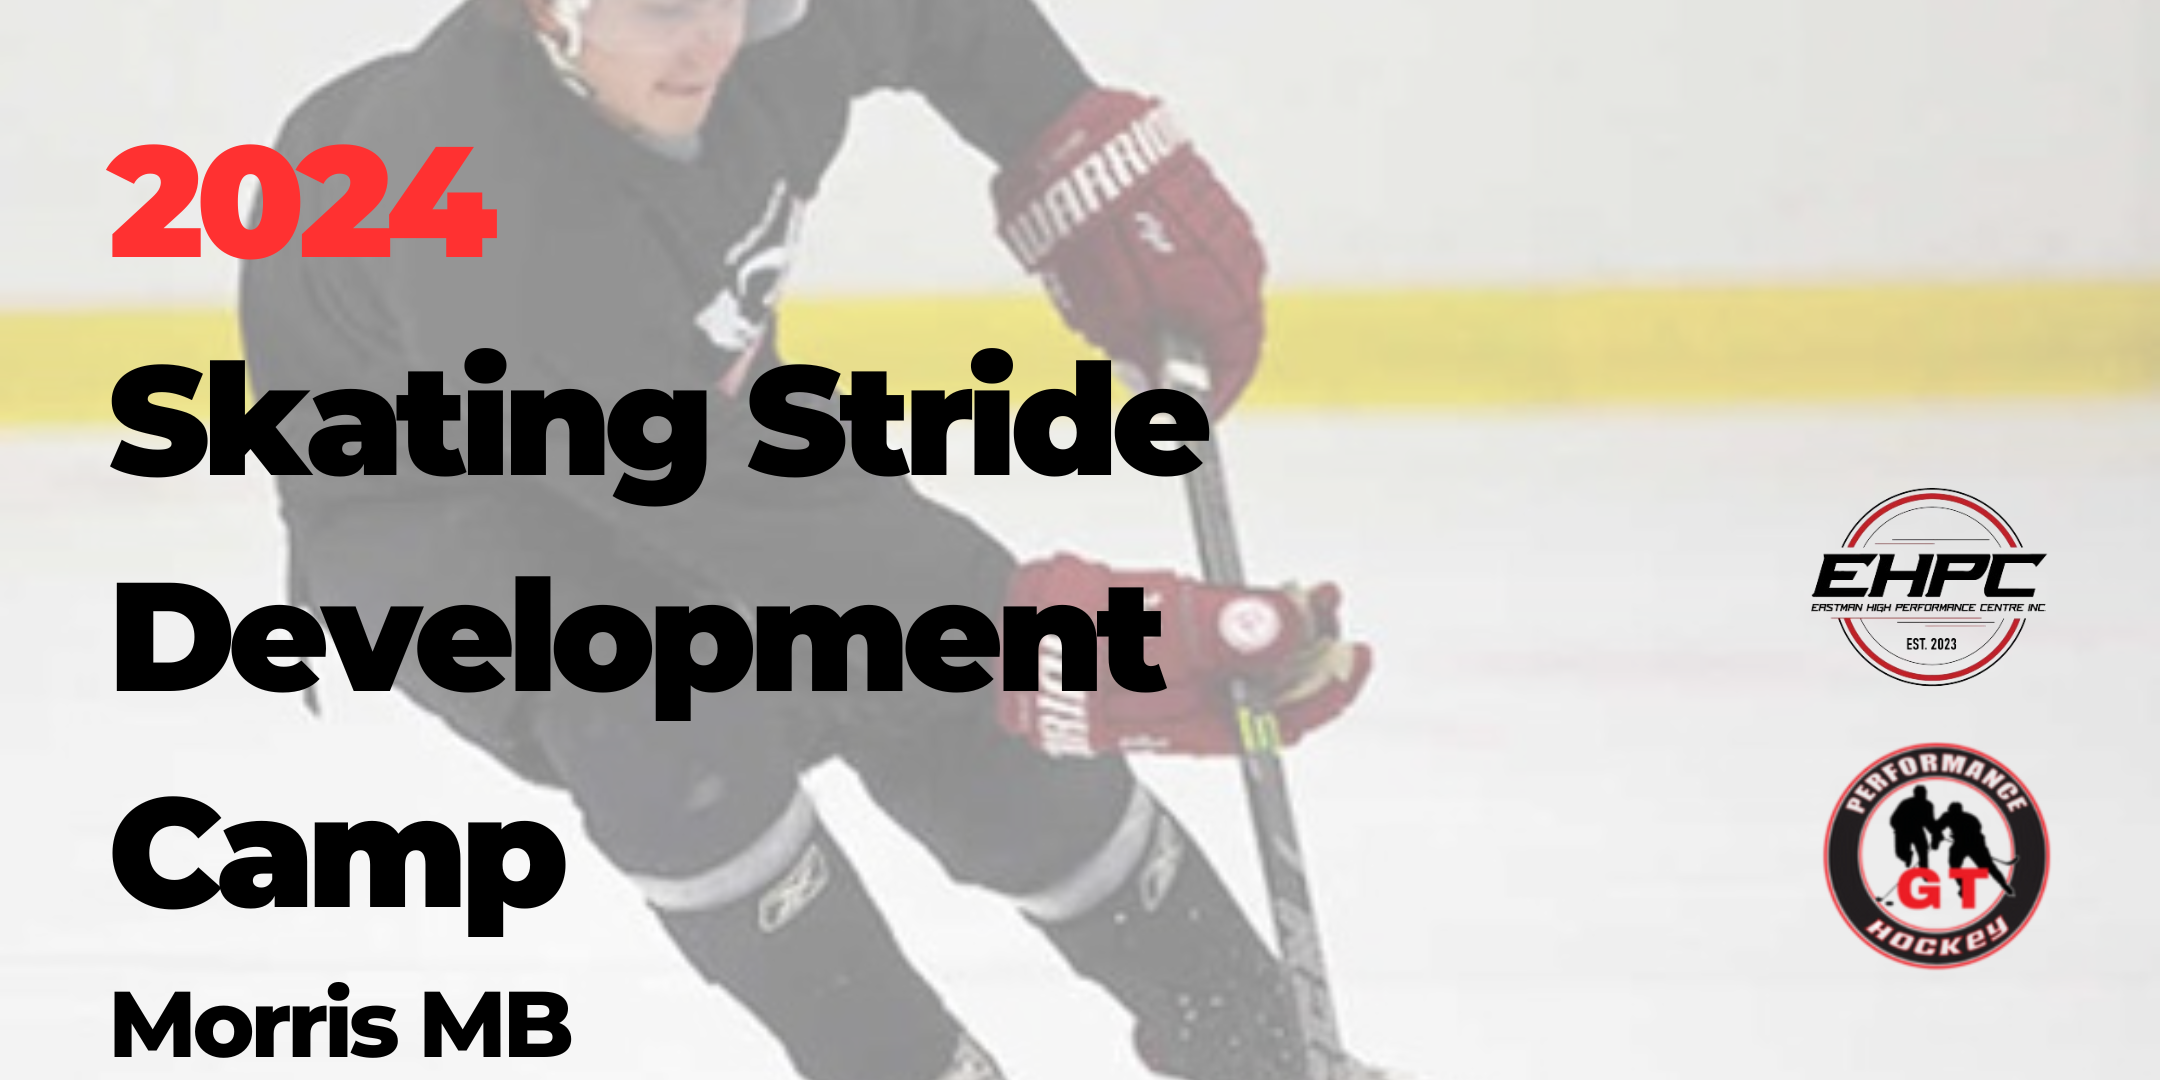 2024 Skating Stride Development Camp 